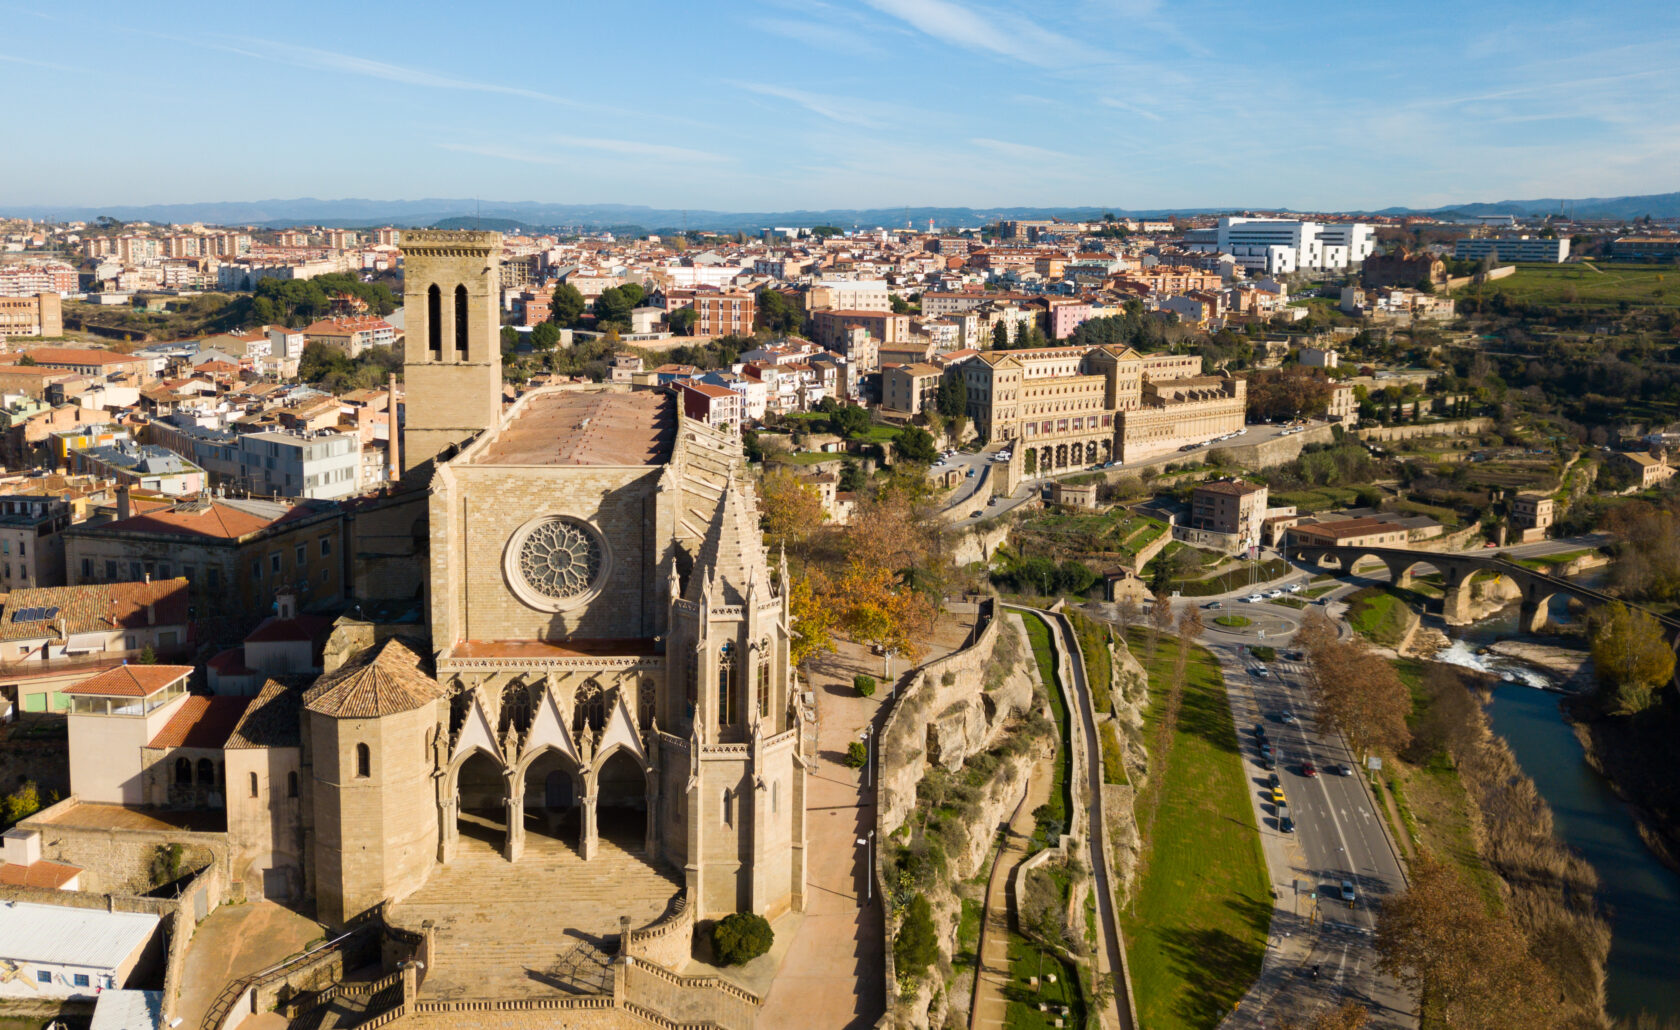 The Collegiate Basilica of Santa Maria with Manresa, Spain (an Atlantis site) in the background.